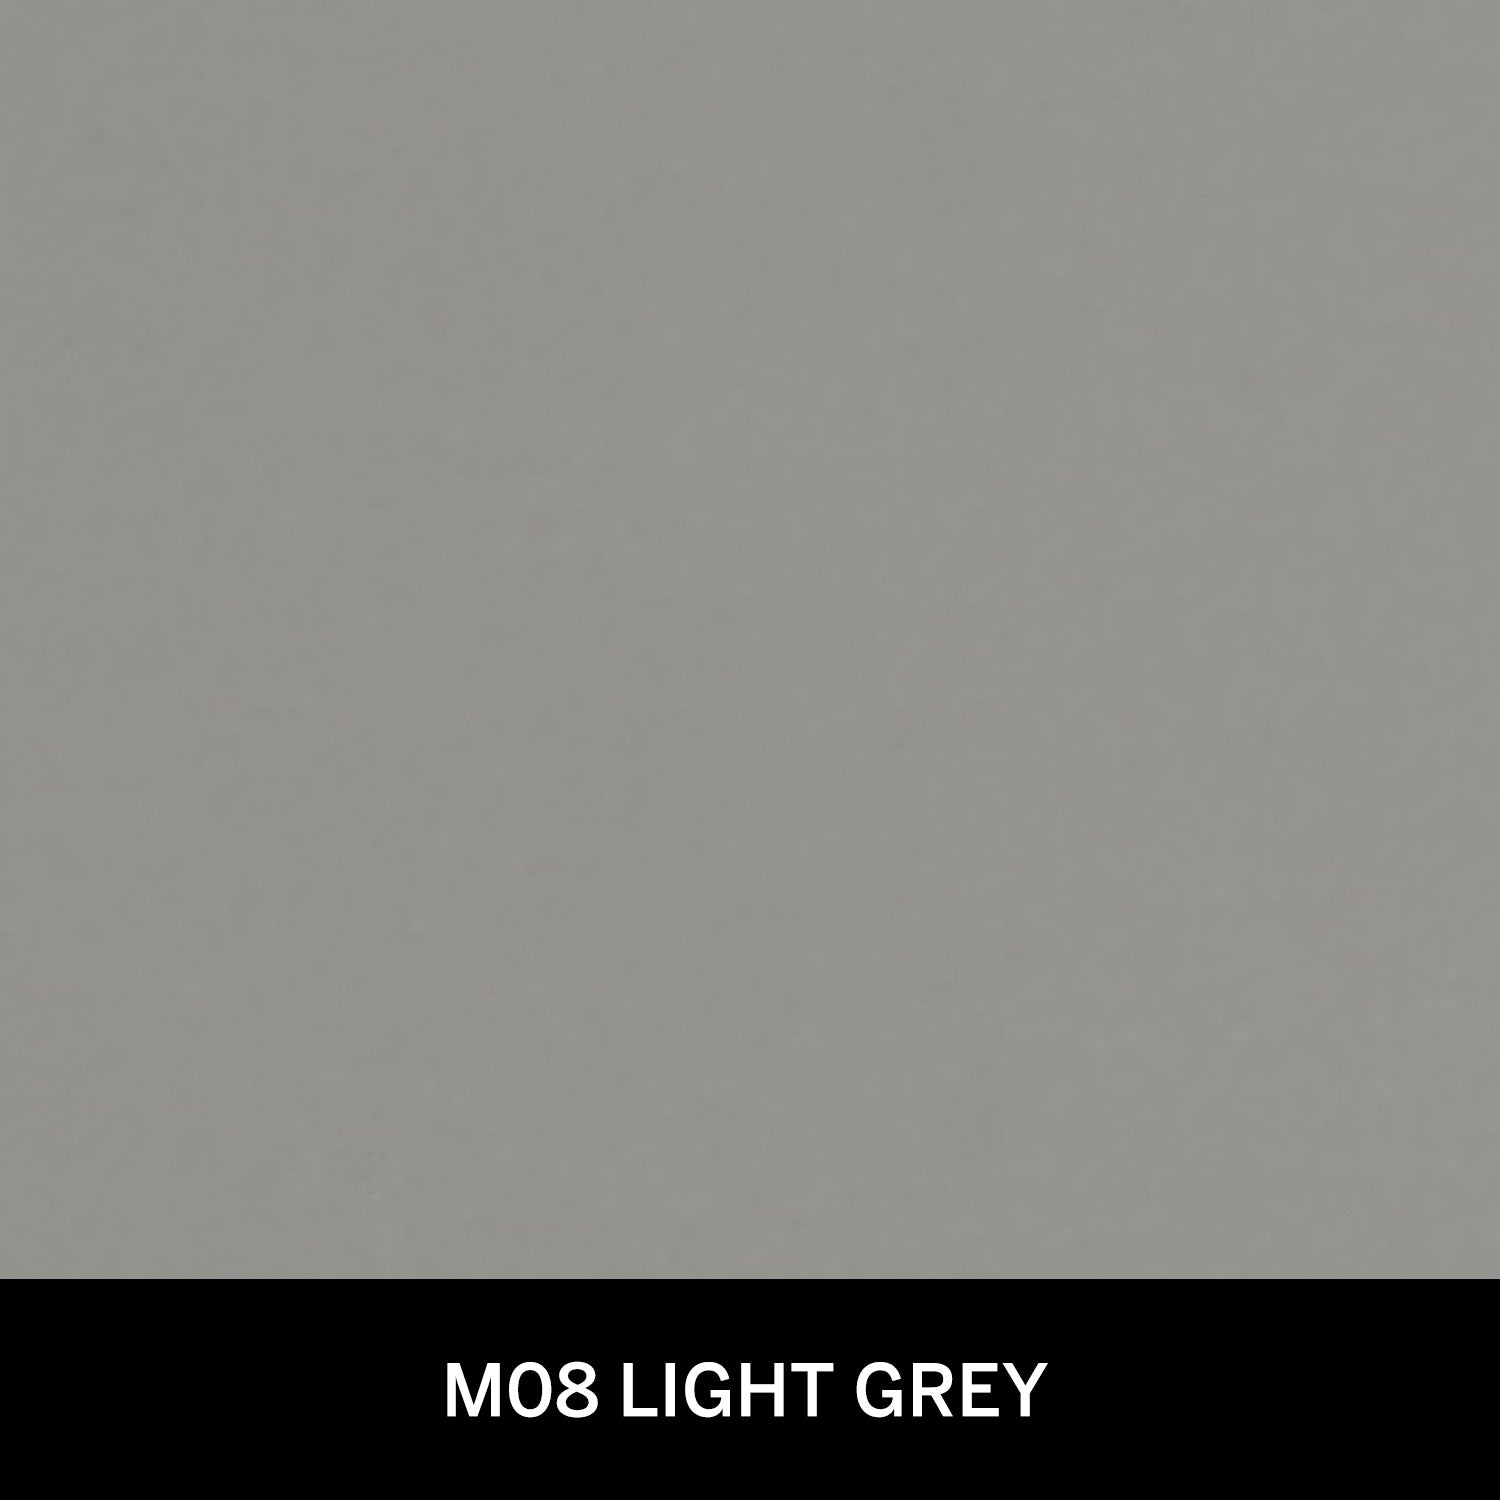 alikante 12 light grey